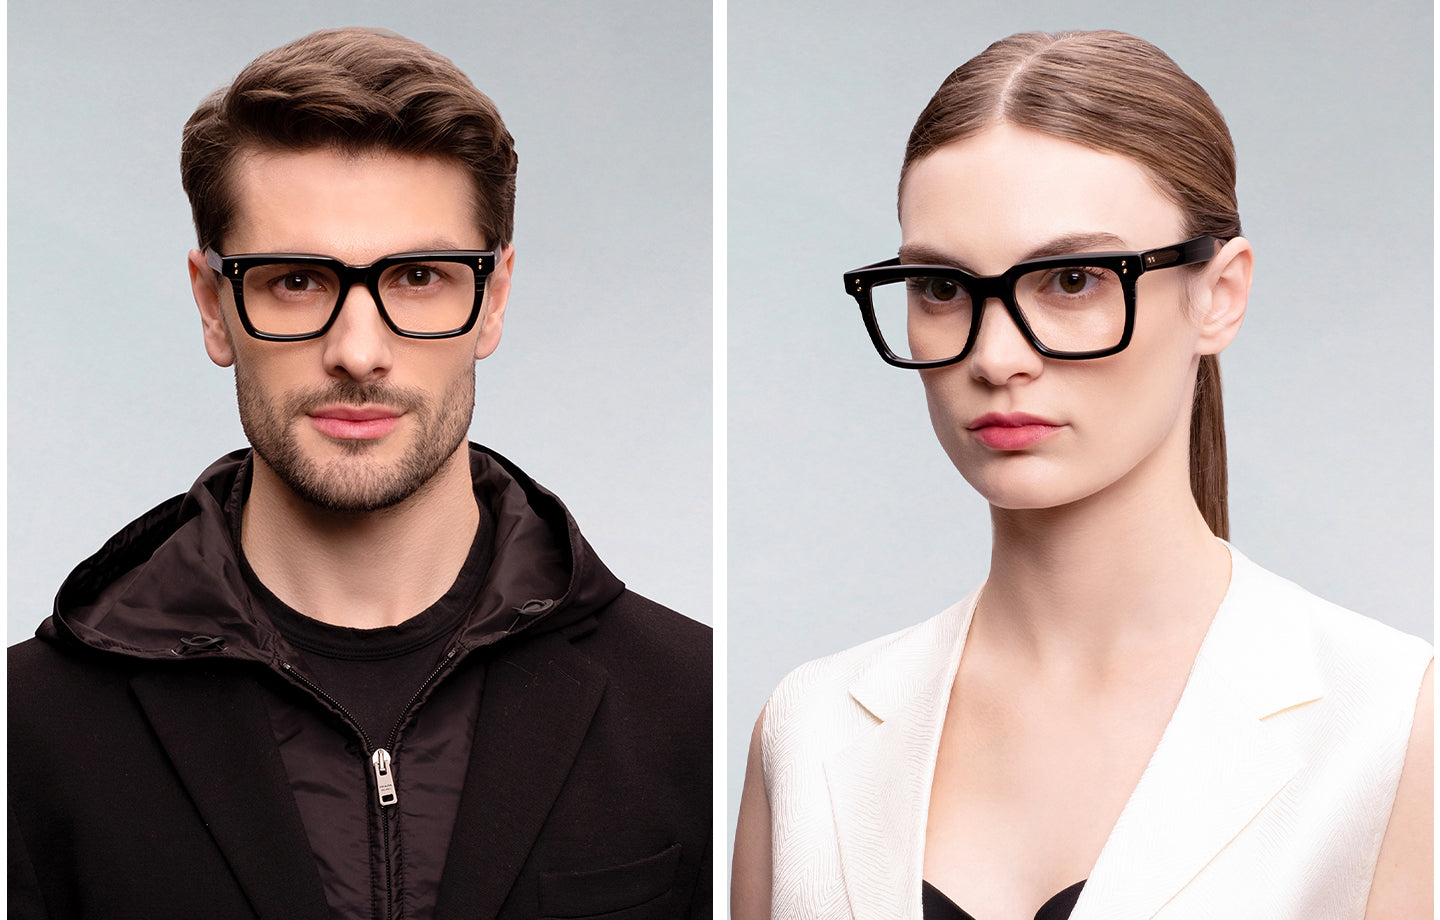 Men's Sunglasses - DITA Eyewear Official